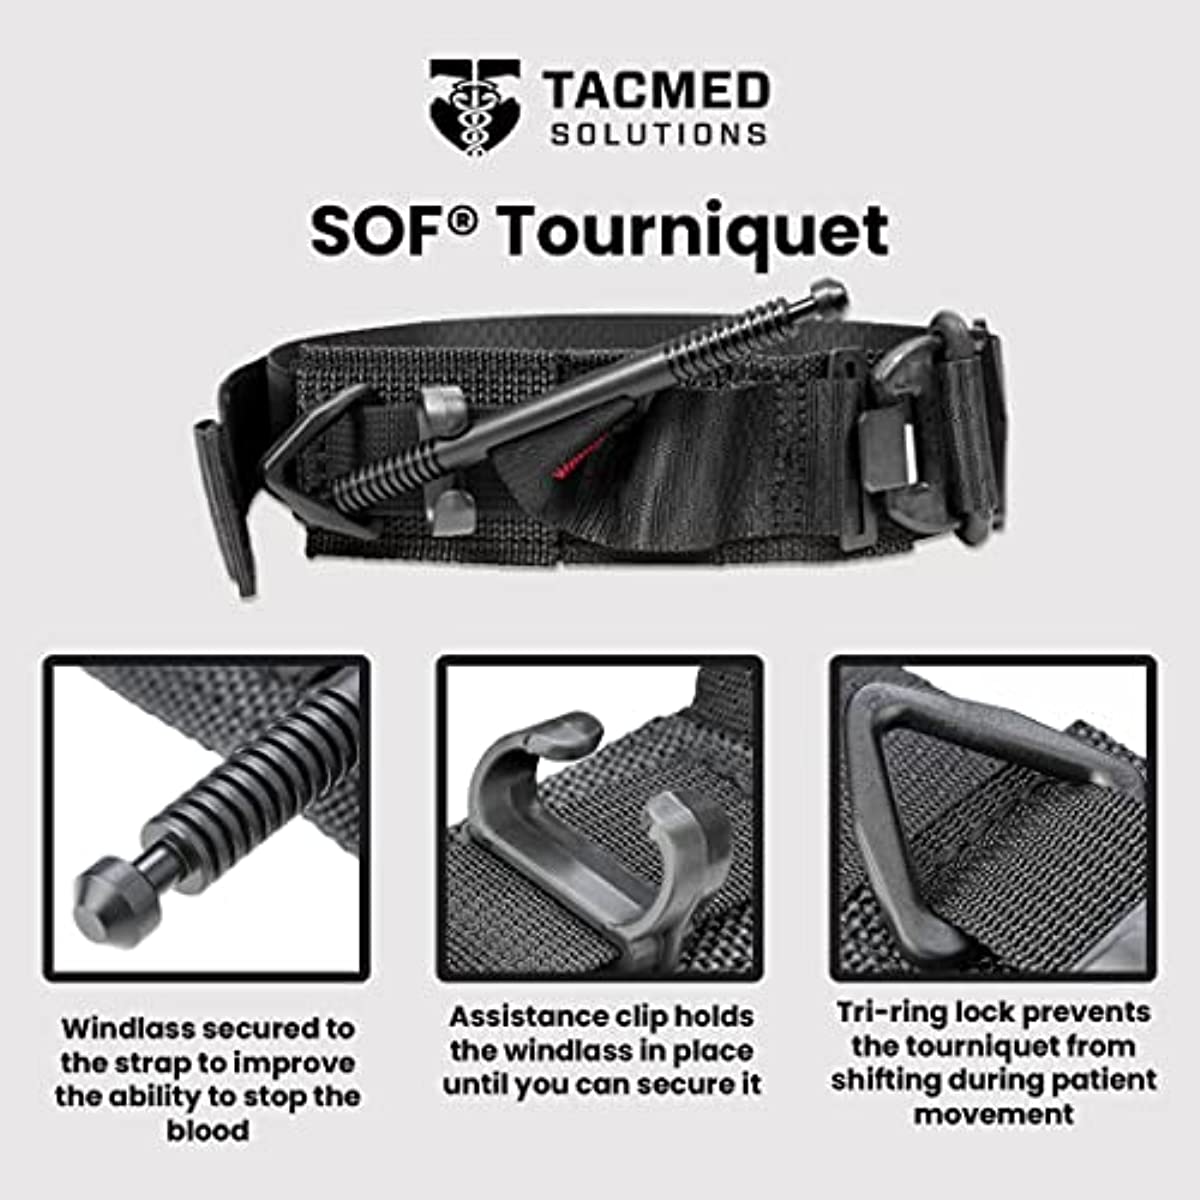 Tactical Medical Solutions SOF Tactical Tourniquet, 1.5” Compression Band for Bleeding Control – Black, 2 Count